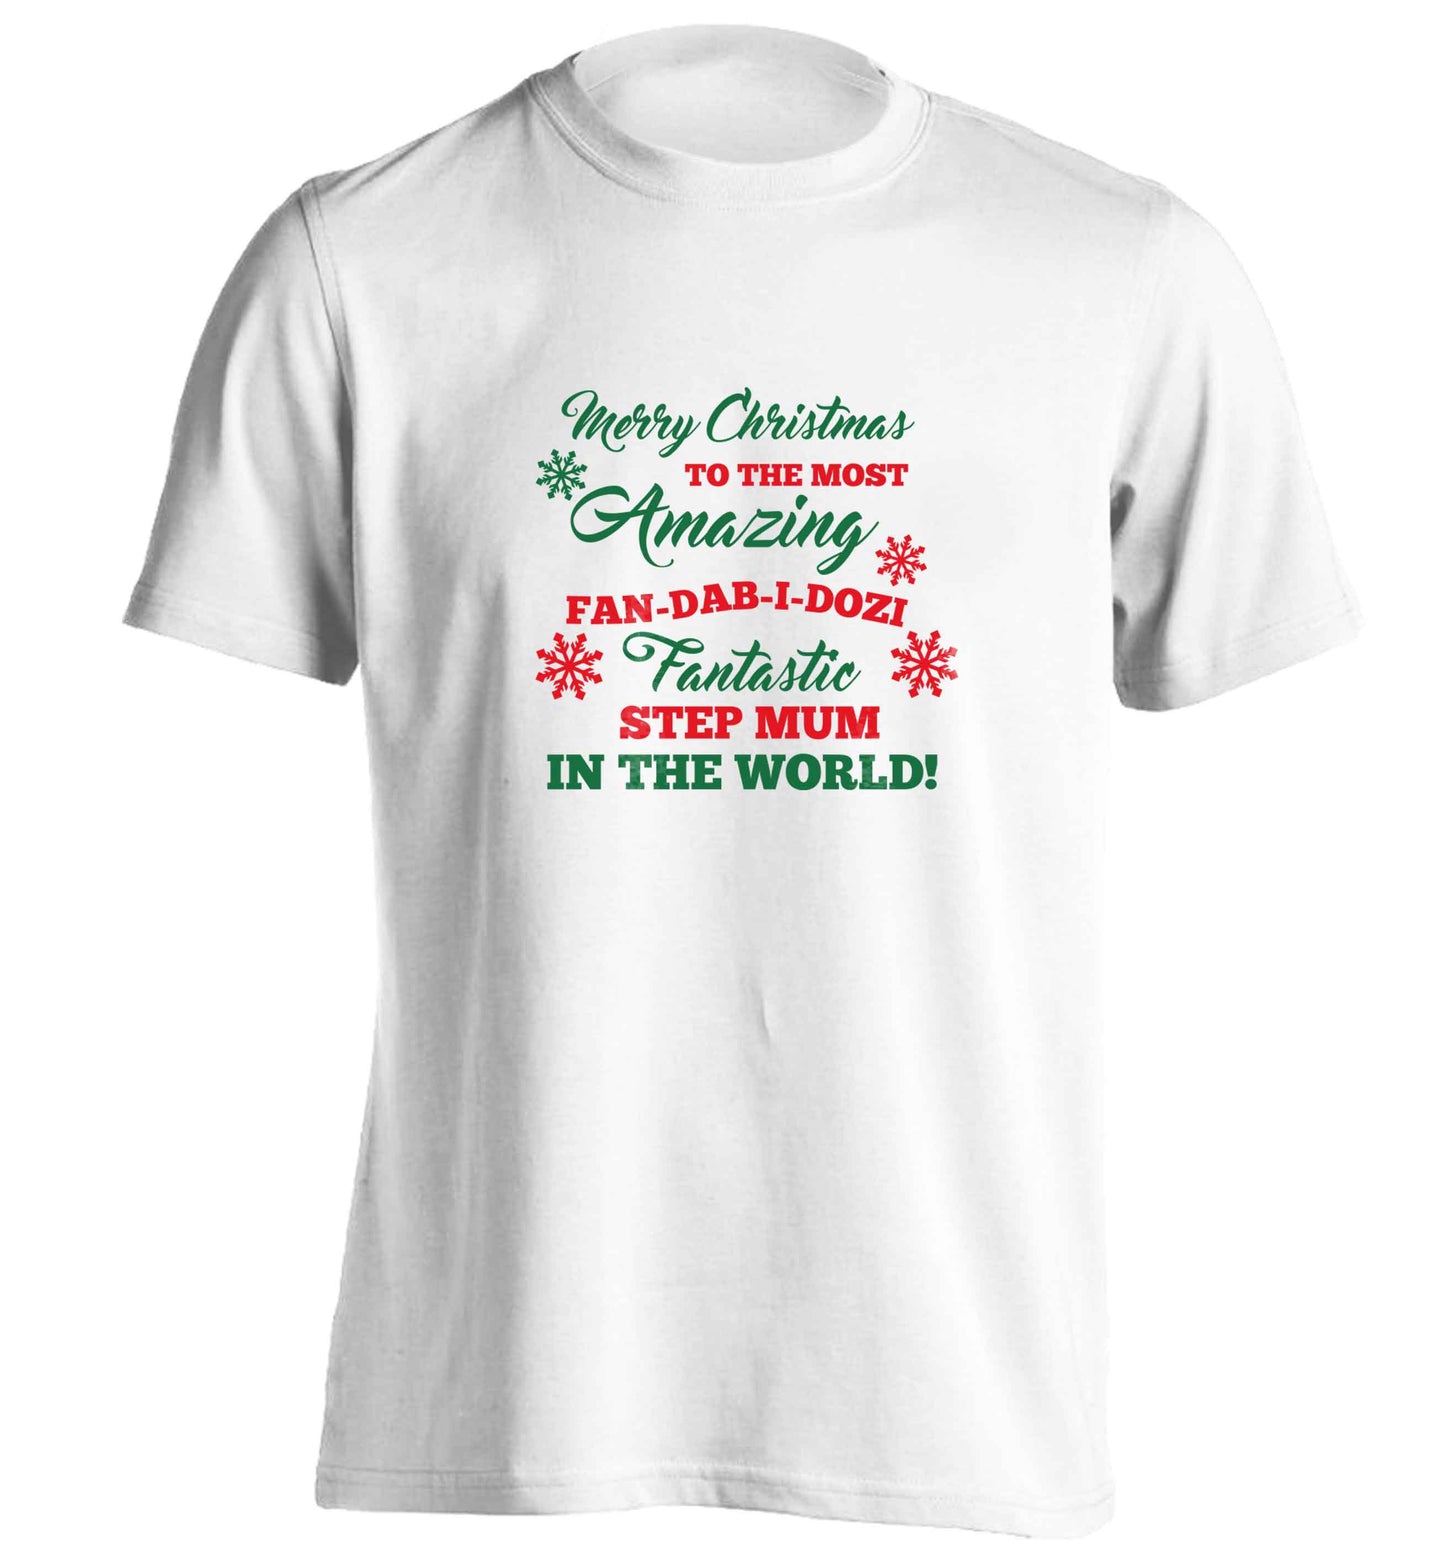 Merry Christmas to the most amazing fan-dab-i-dozi fantasic Step Mum in the world adults unisex white Tshirt 2XL